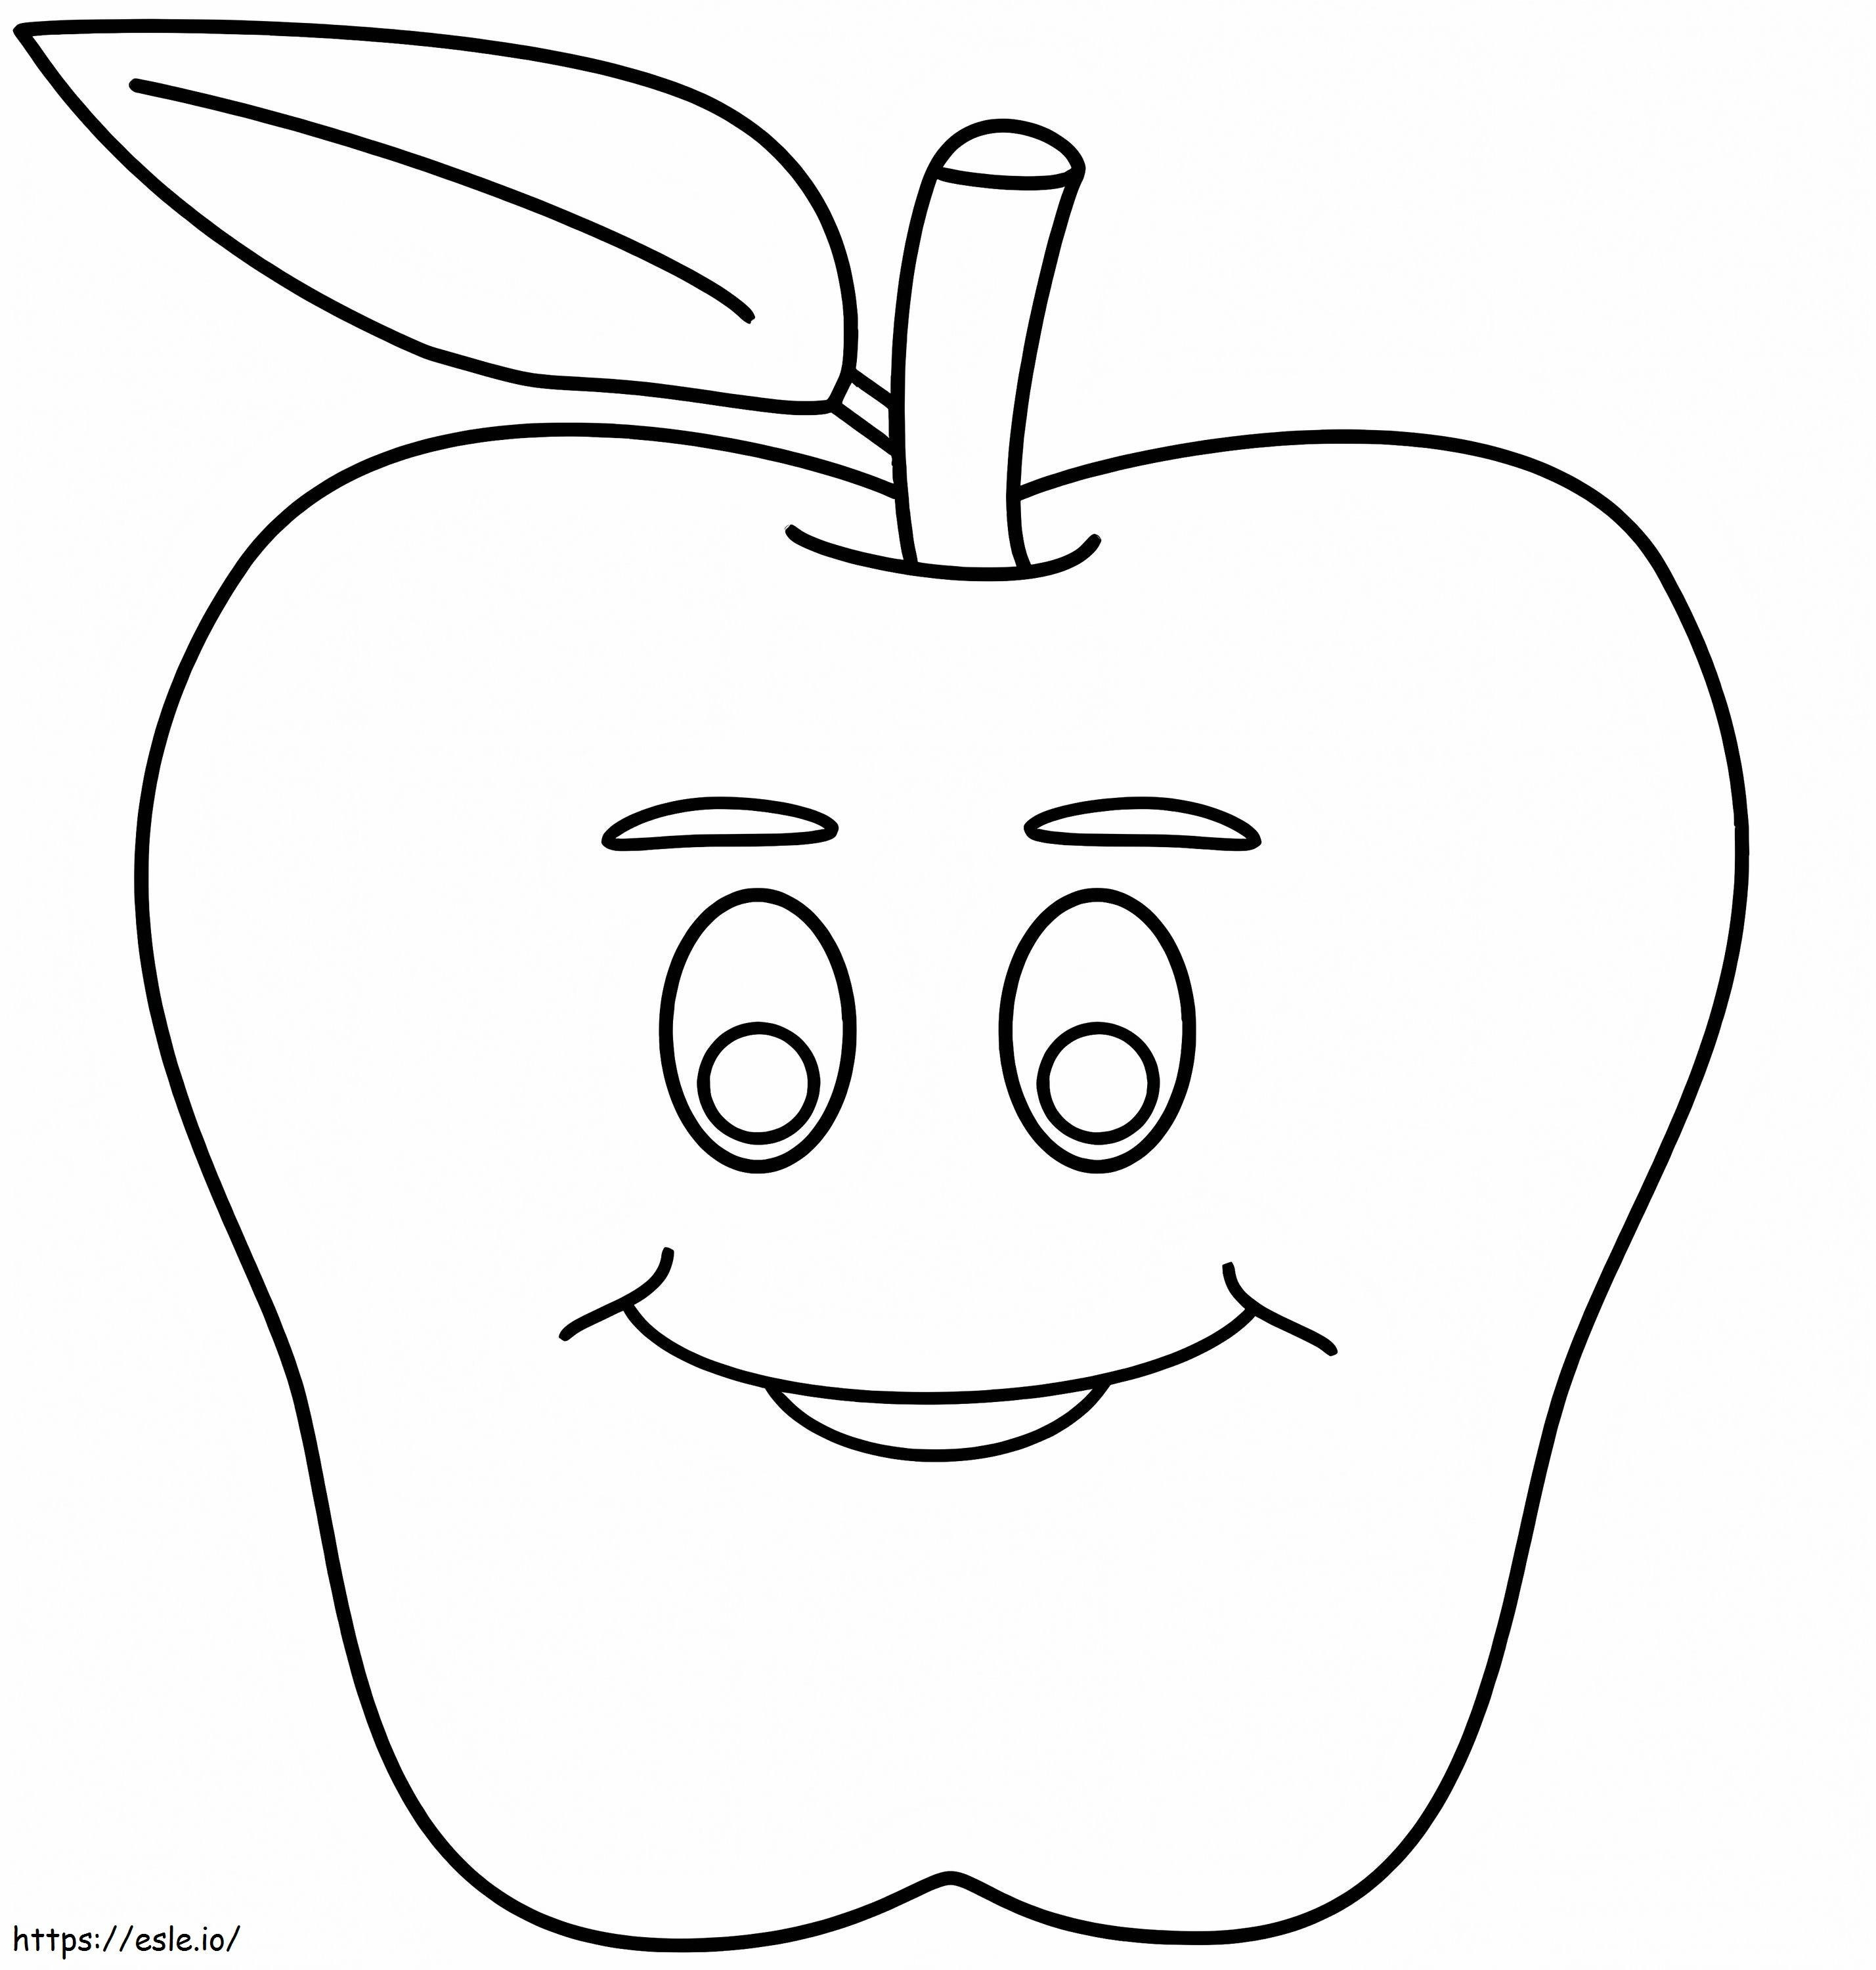 Cara sorridente de maçã para colorir